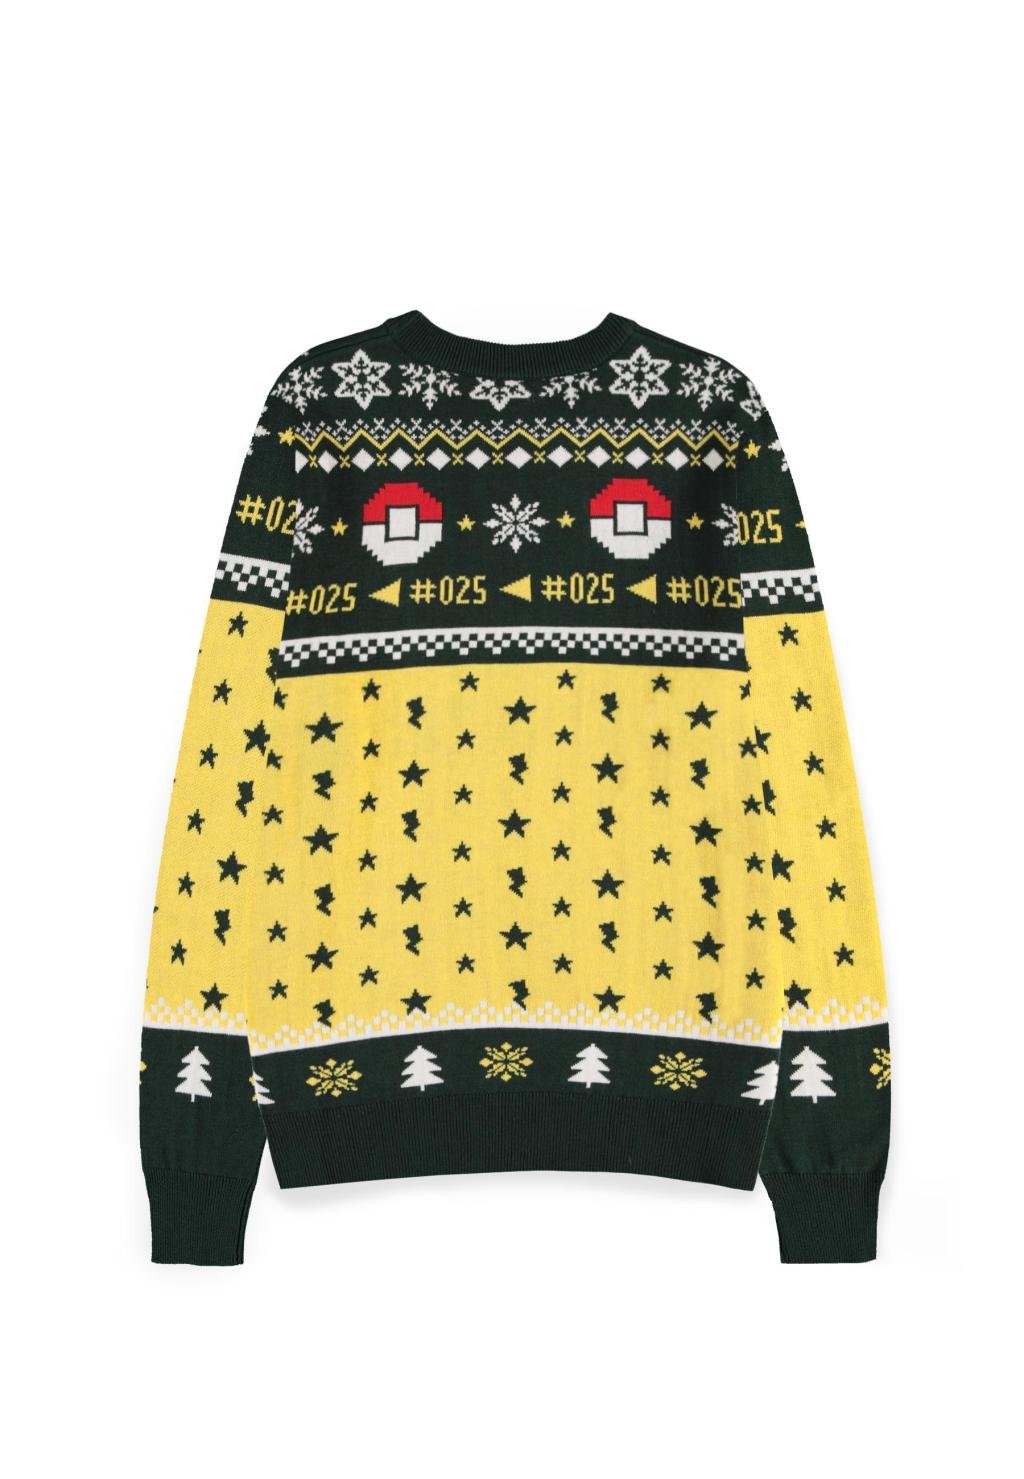 POKEMON - Happy Pikachu - Christmas Jumper (XL)